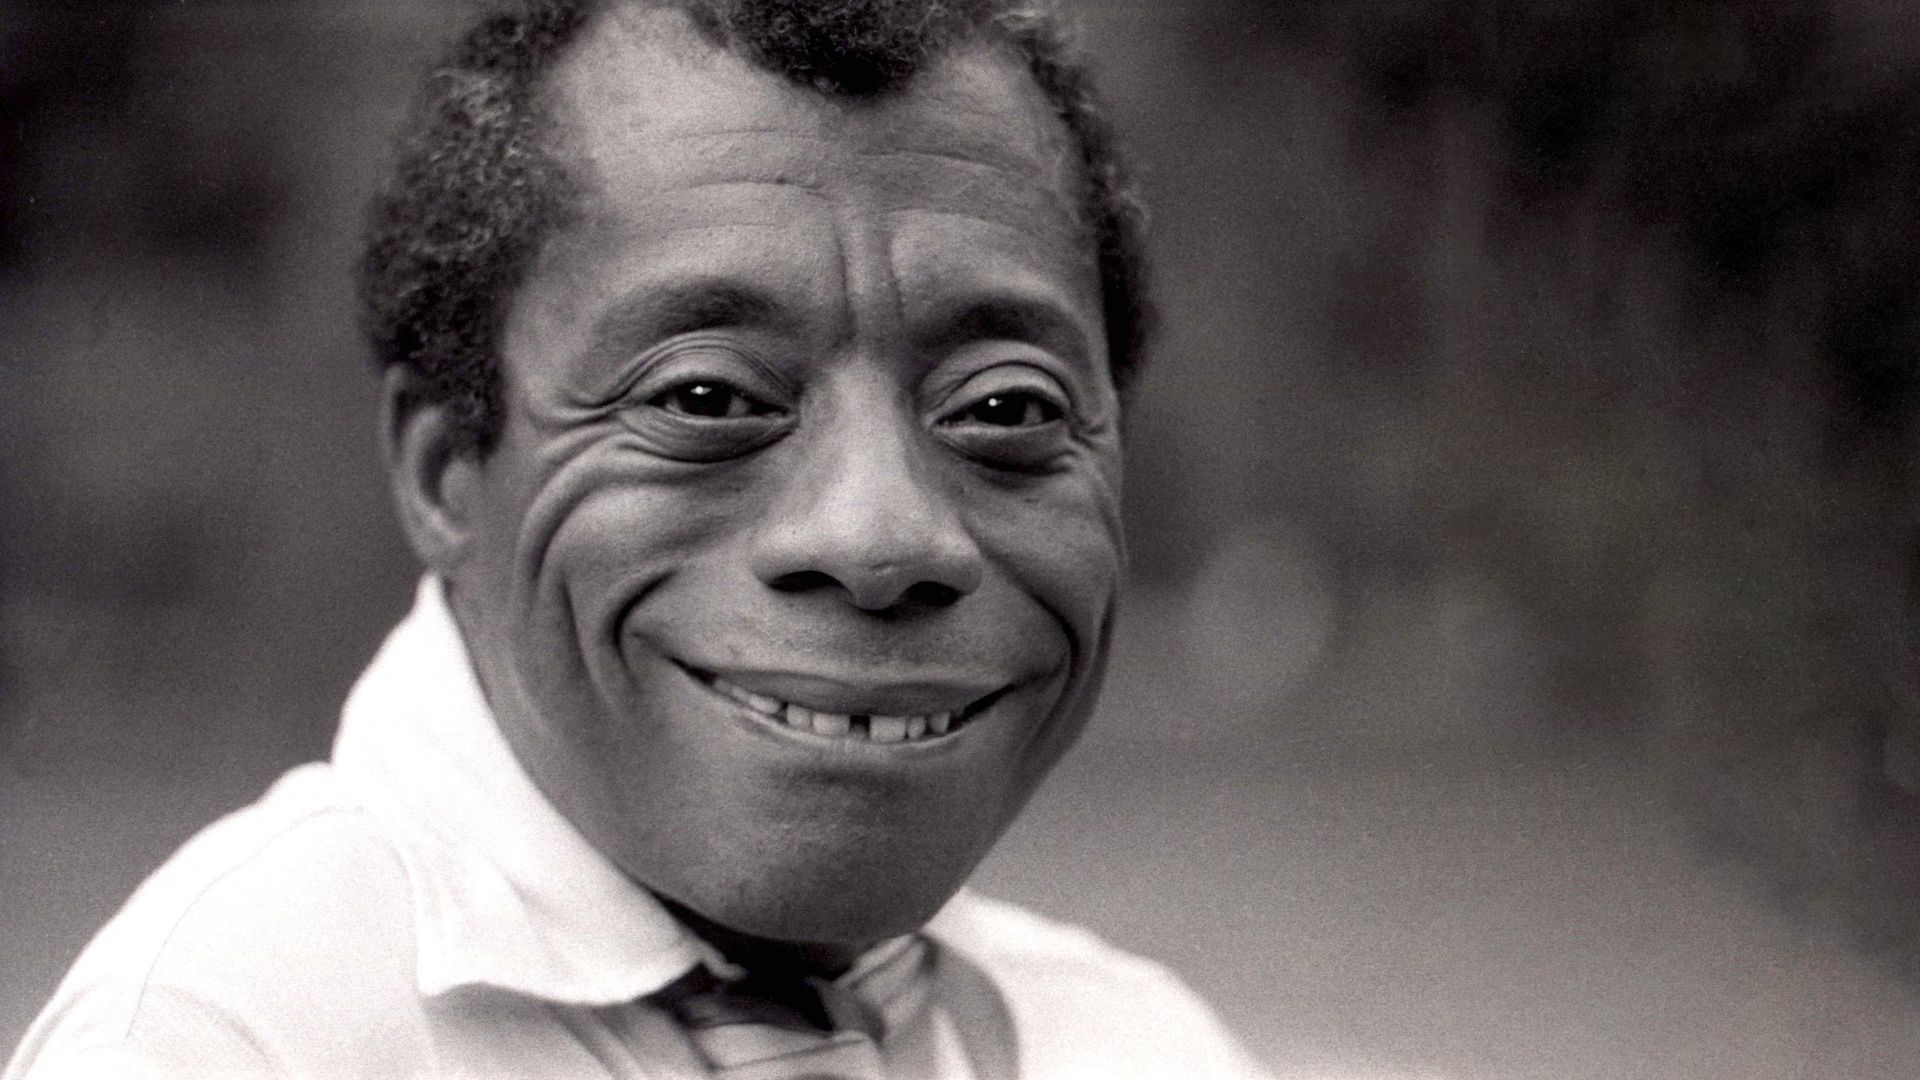 James Baldwin smiling